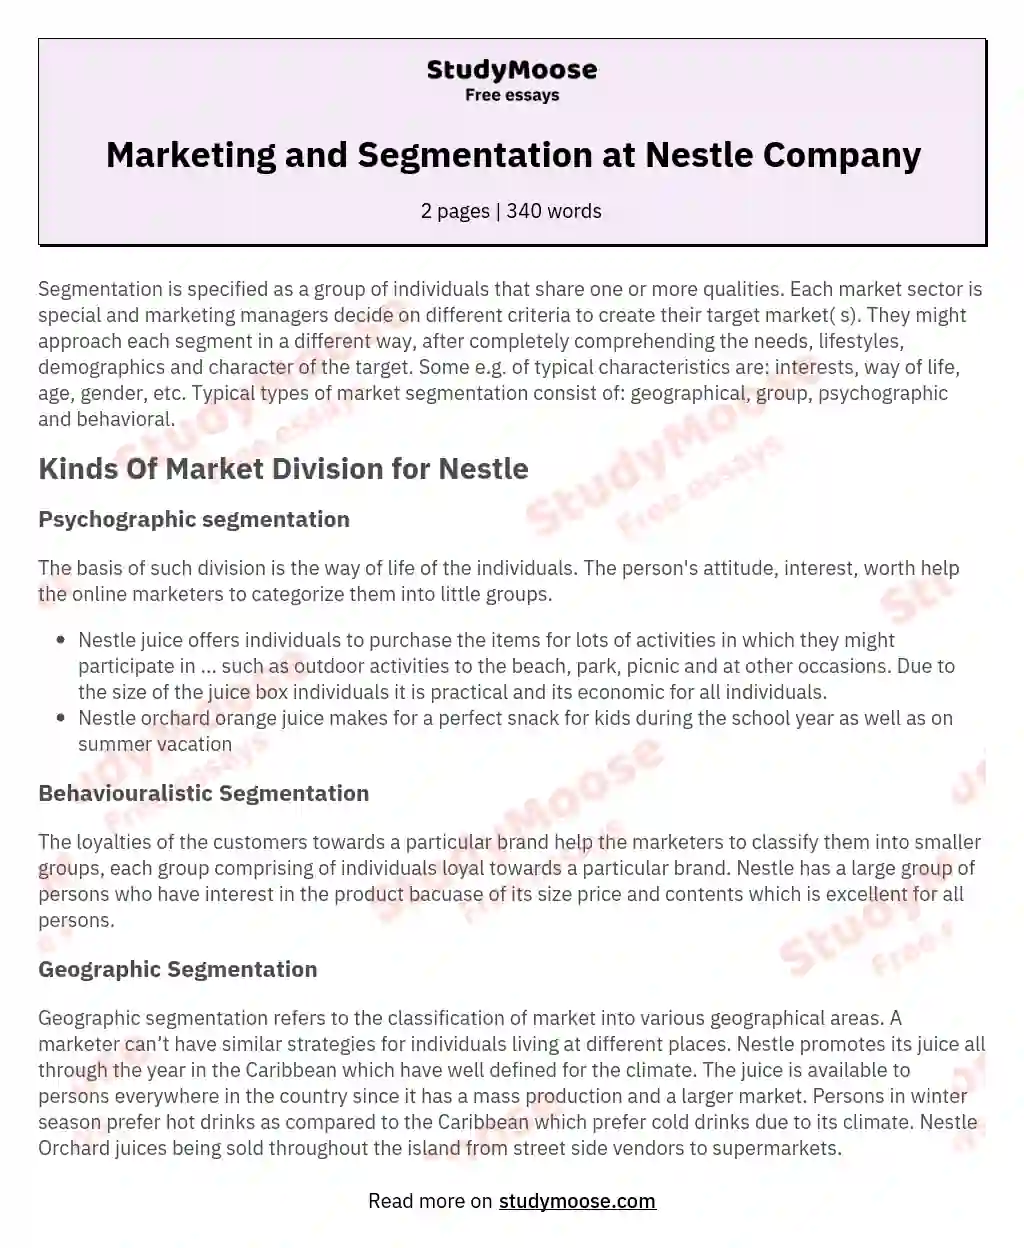 Marketing and Segmentation at Nestle Company